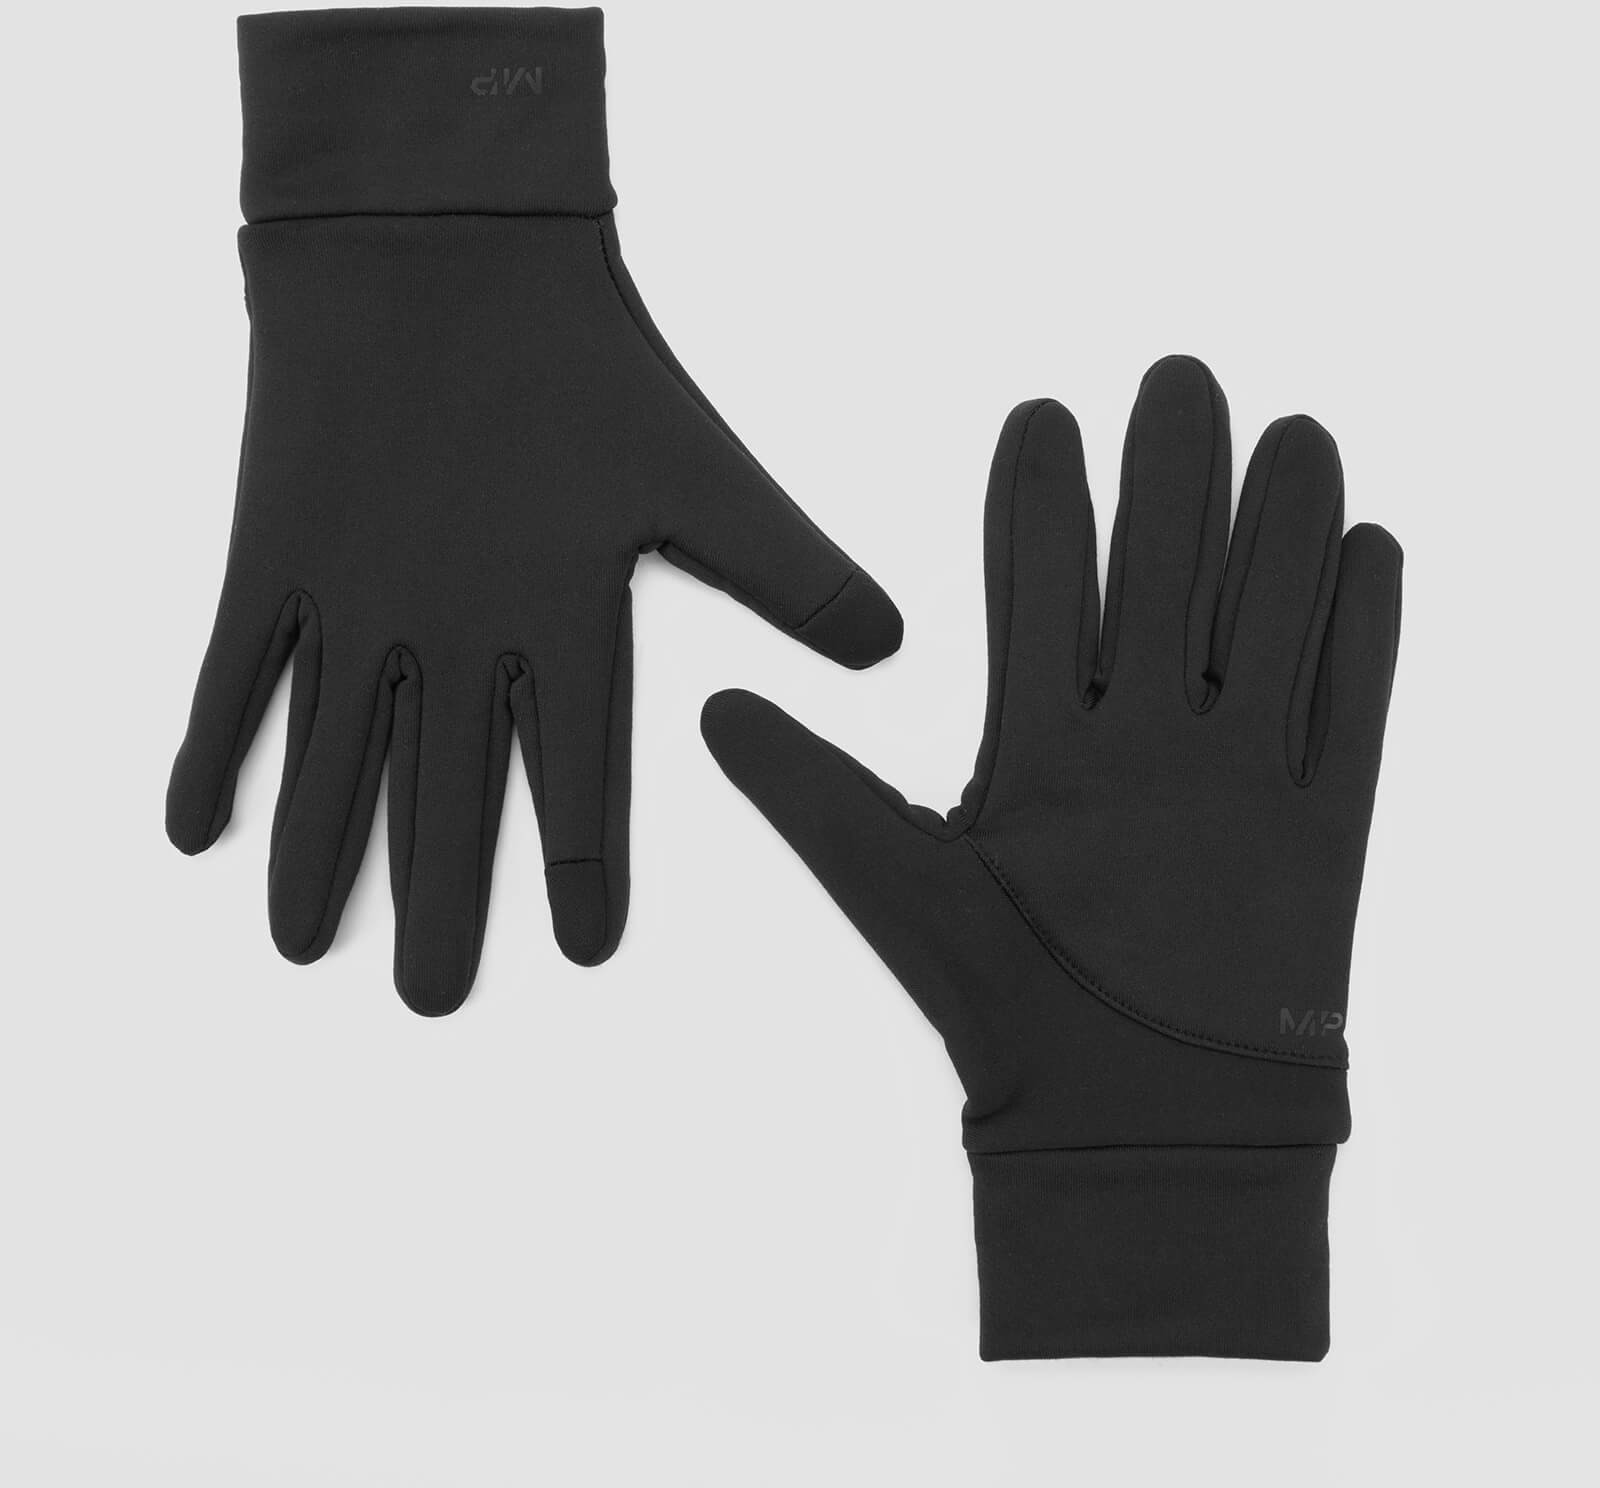 MP MP Reflective Running Gloves - Black - L/XL